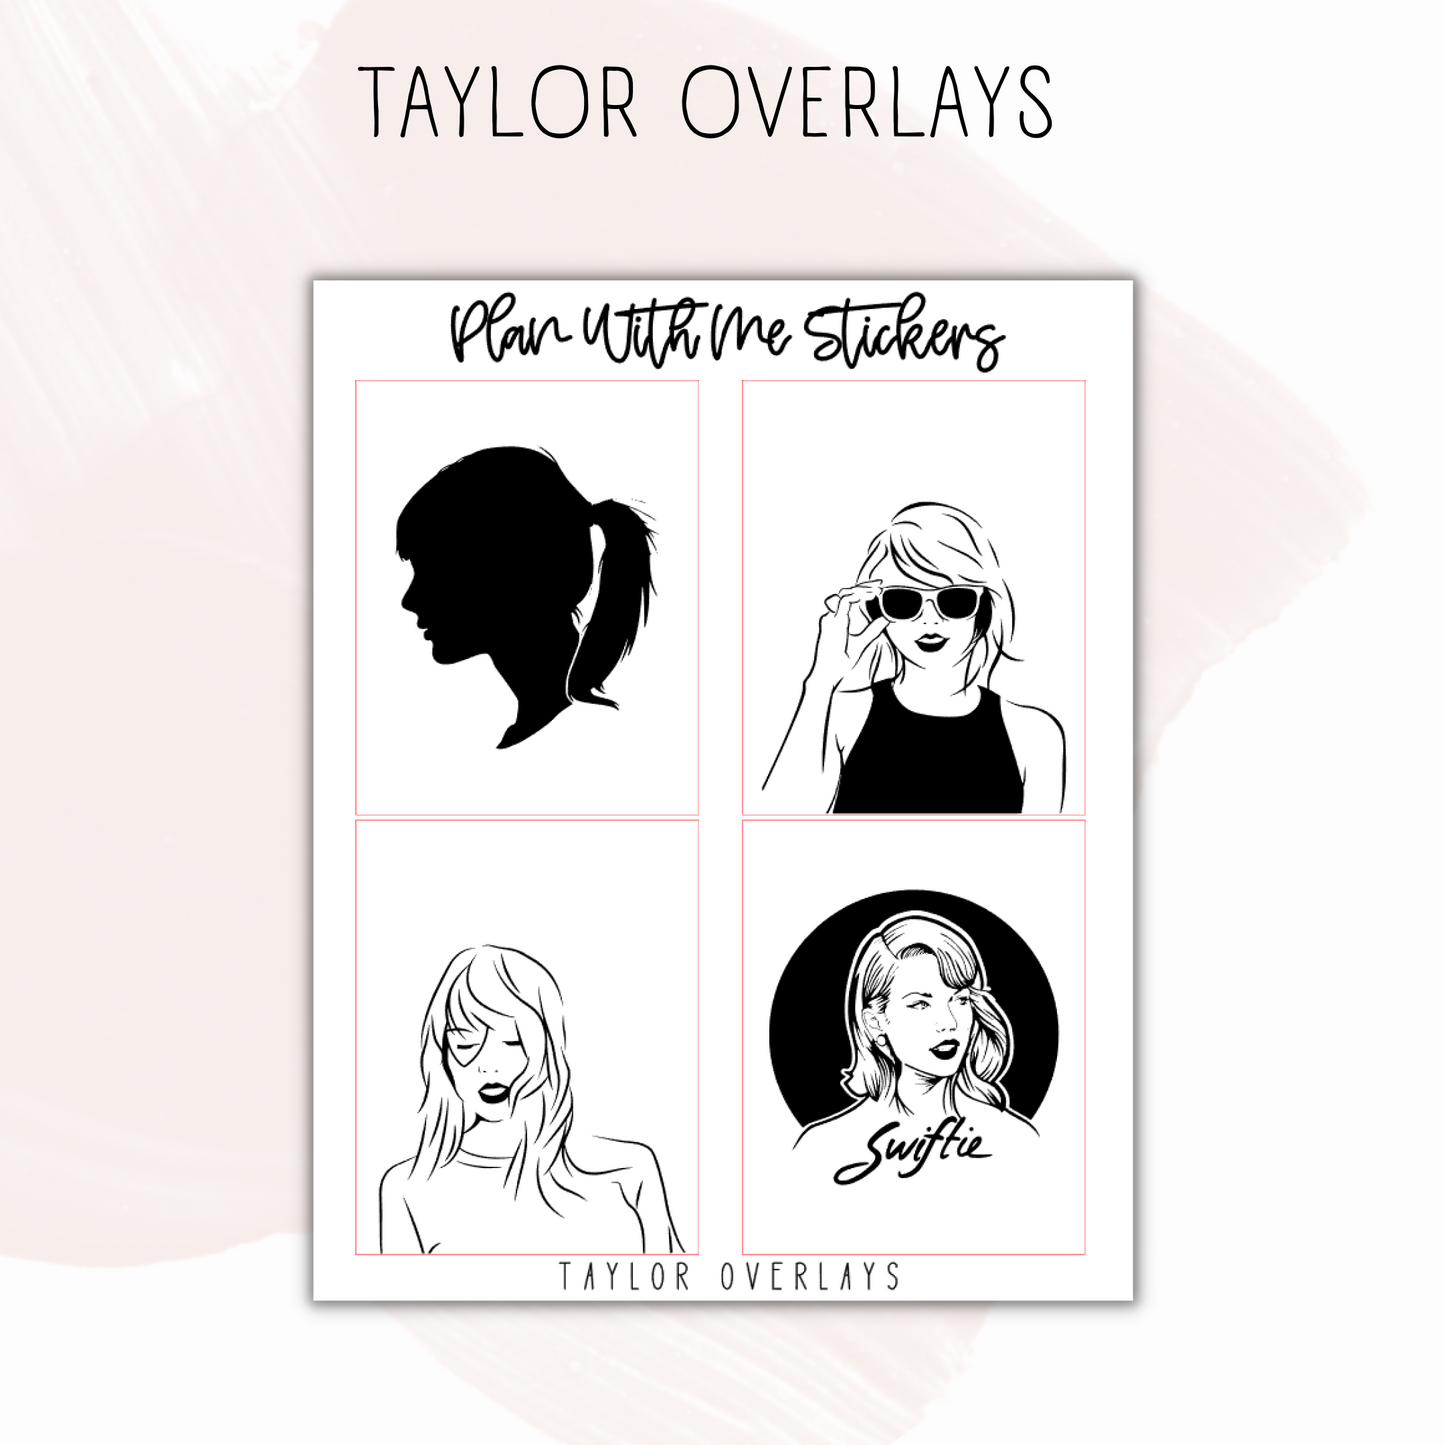 Taylor Overlays